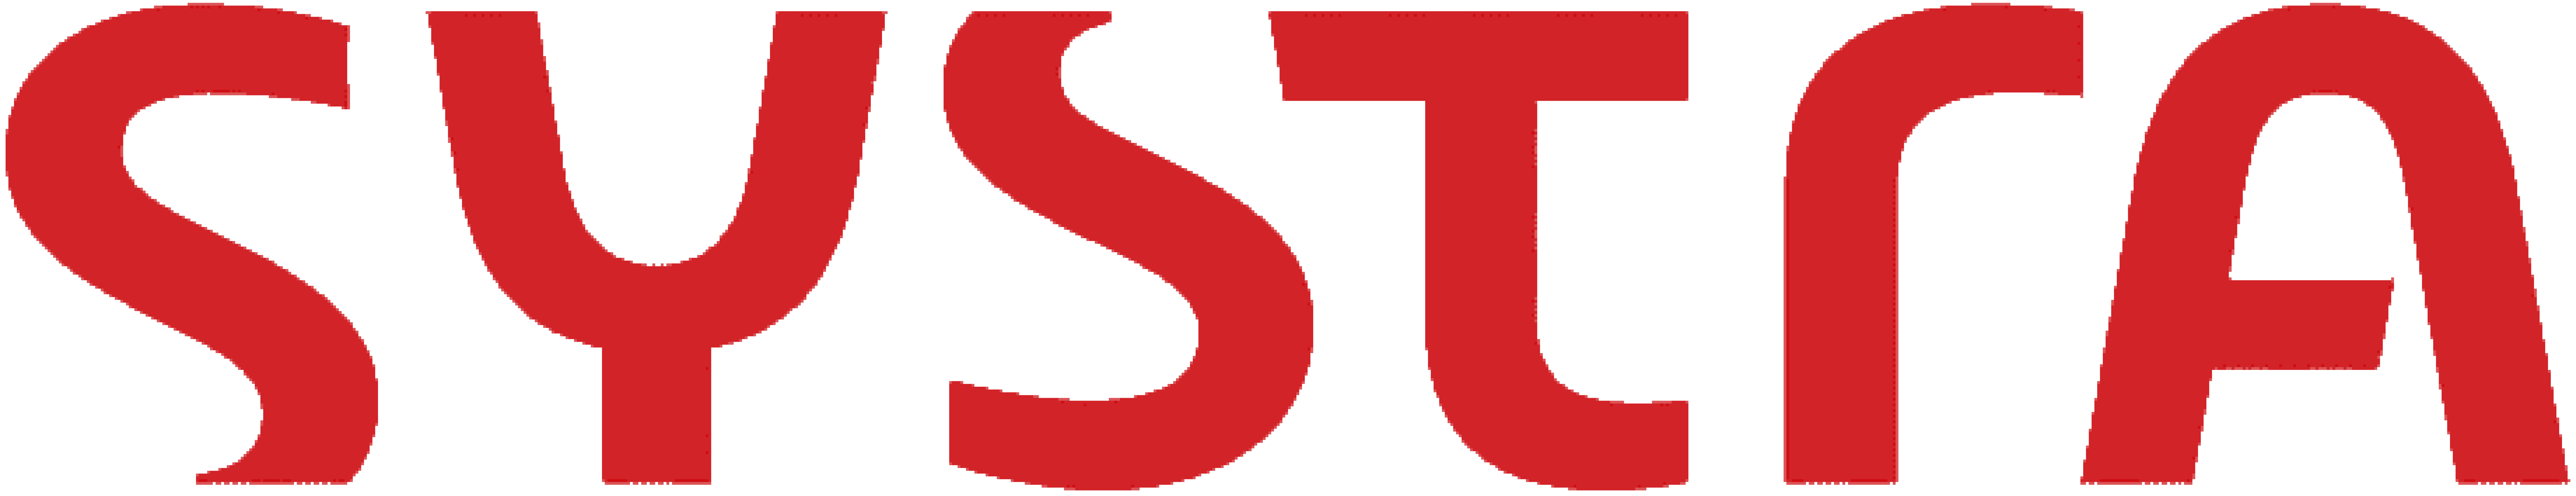 Systra logo